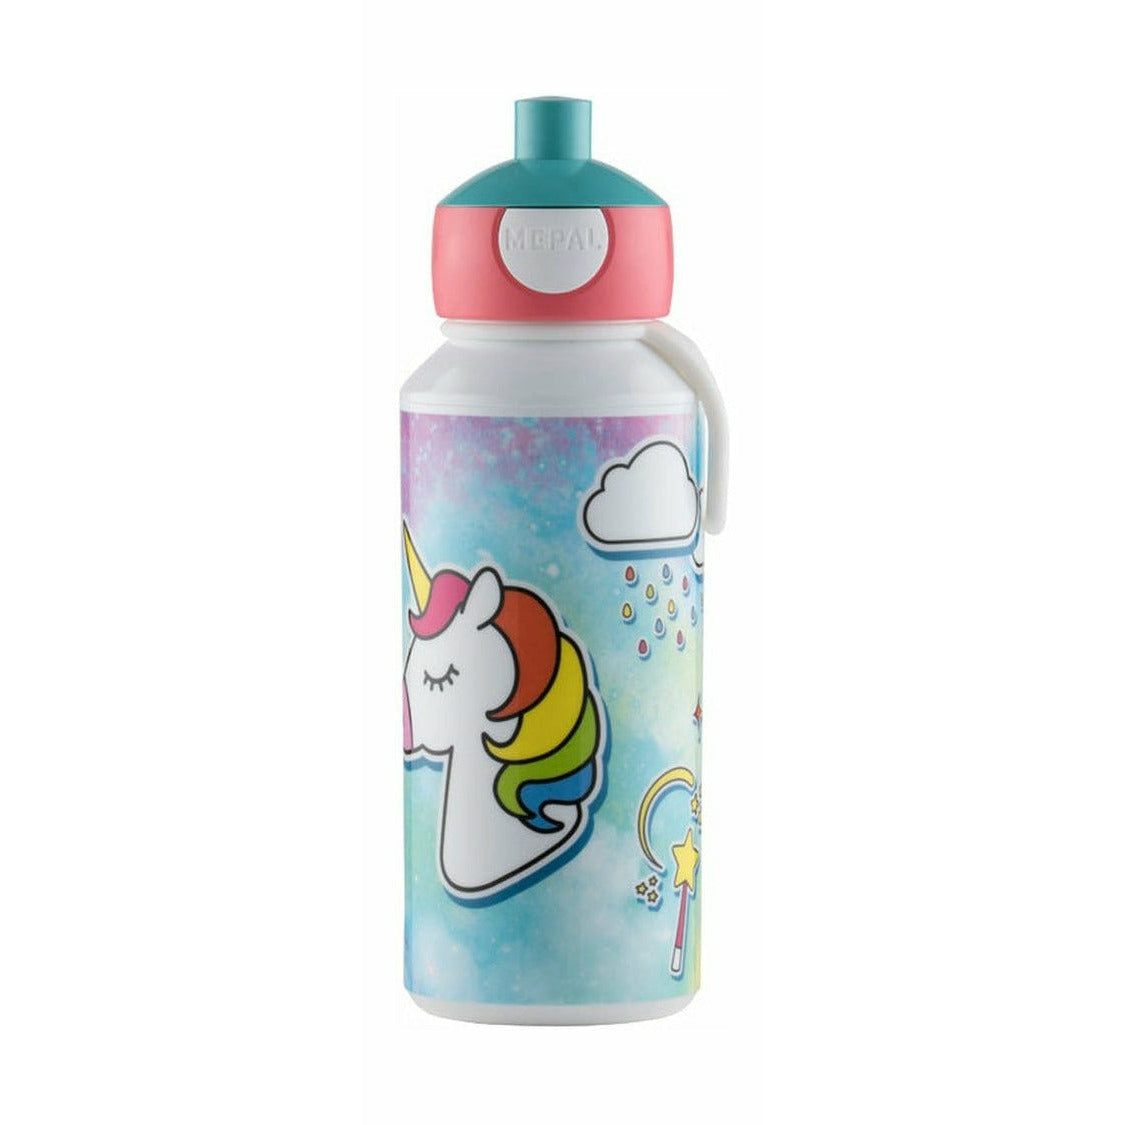 Mepal Water Flasche Pop -Up Campus Unicorn, 0,4 l